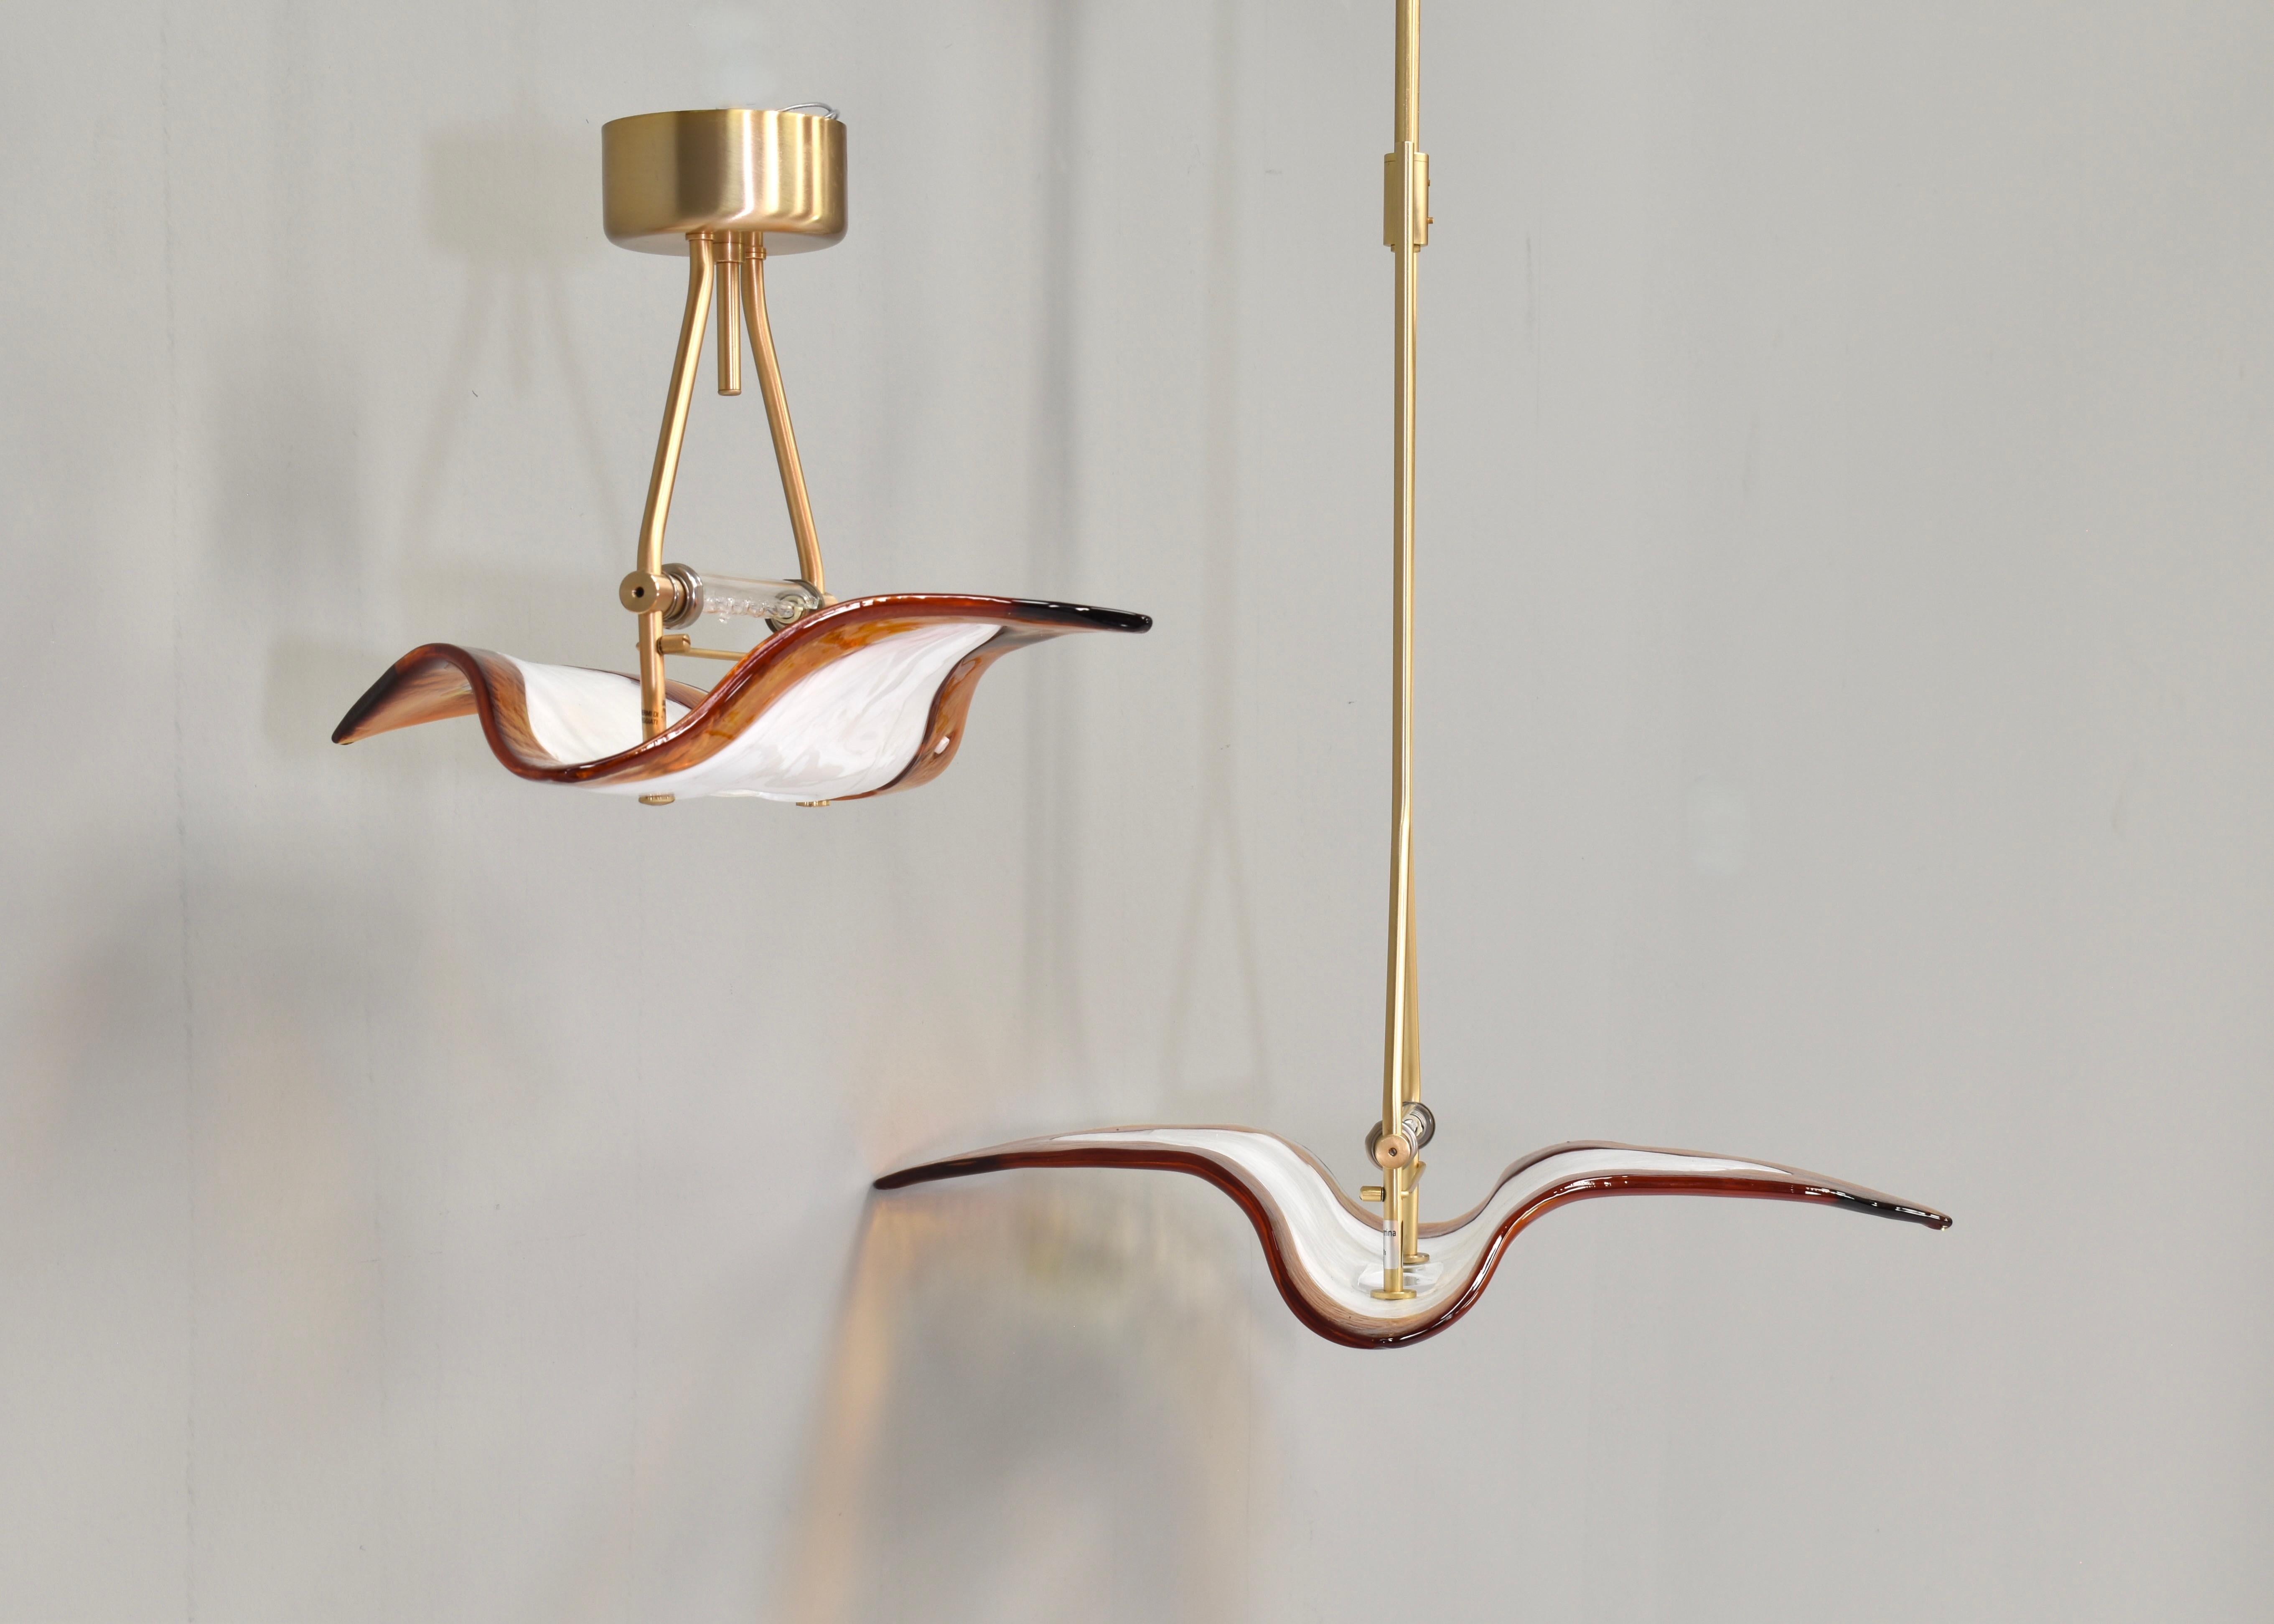 La Murrina 'Albatros' ceiling lamp Murano glass / brass details Italy circa 1980 For Sale 2